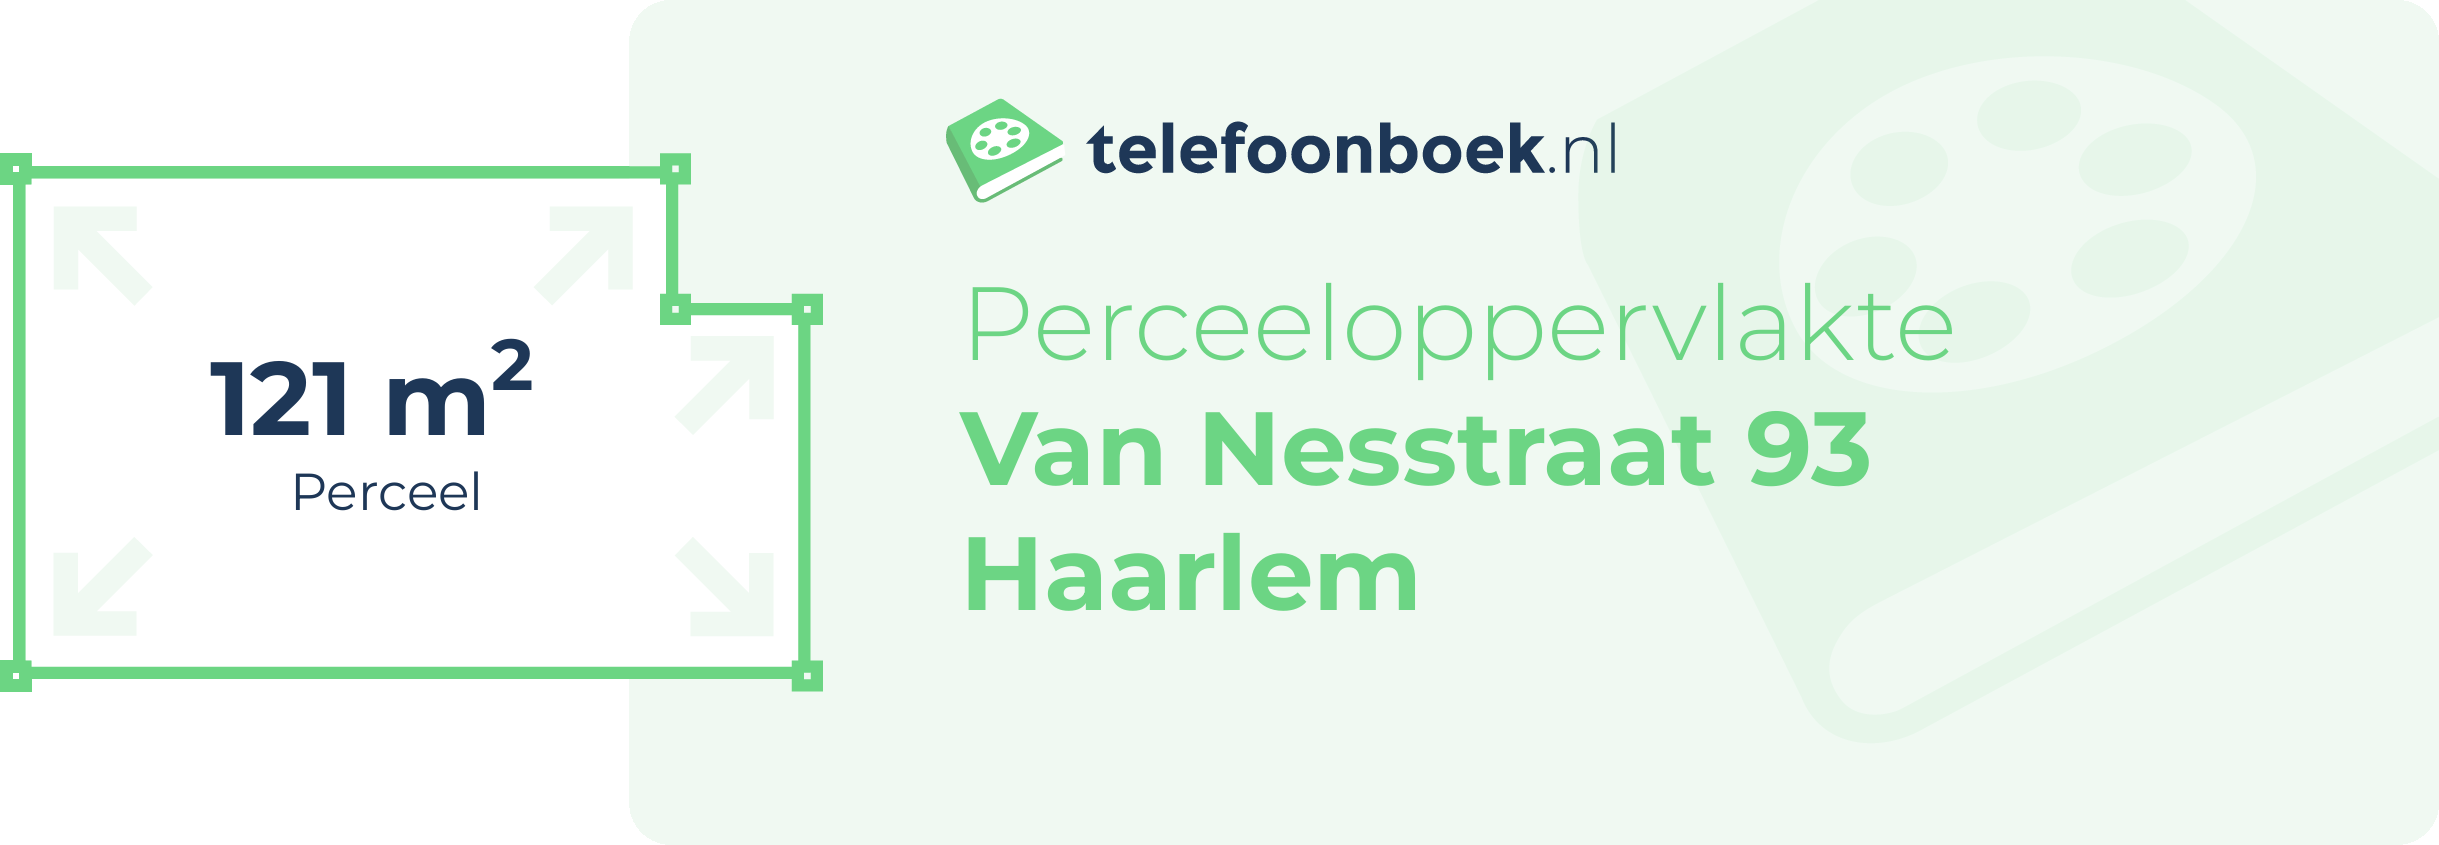 Perceeloppervlakte Van Nesstraat 93 Haarlem